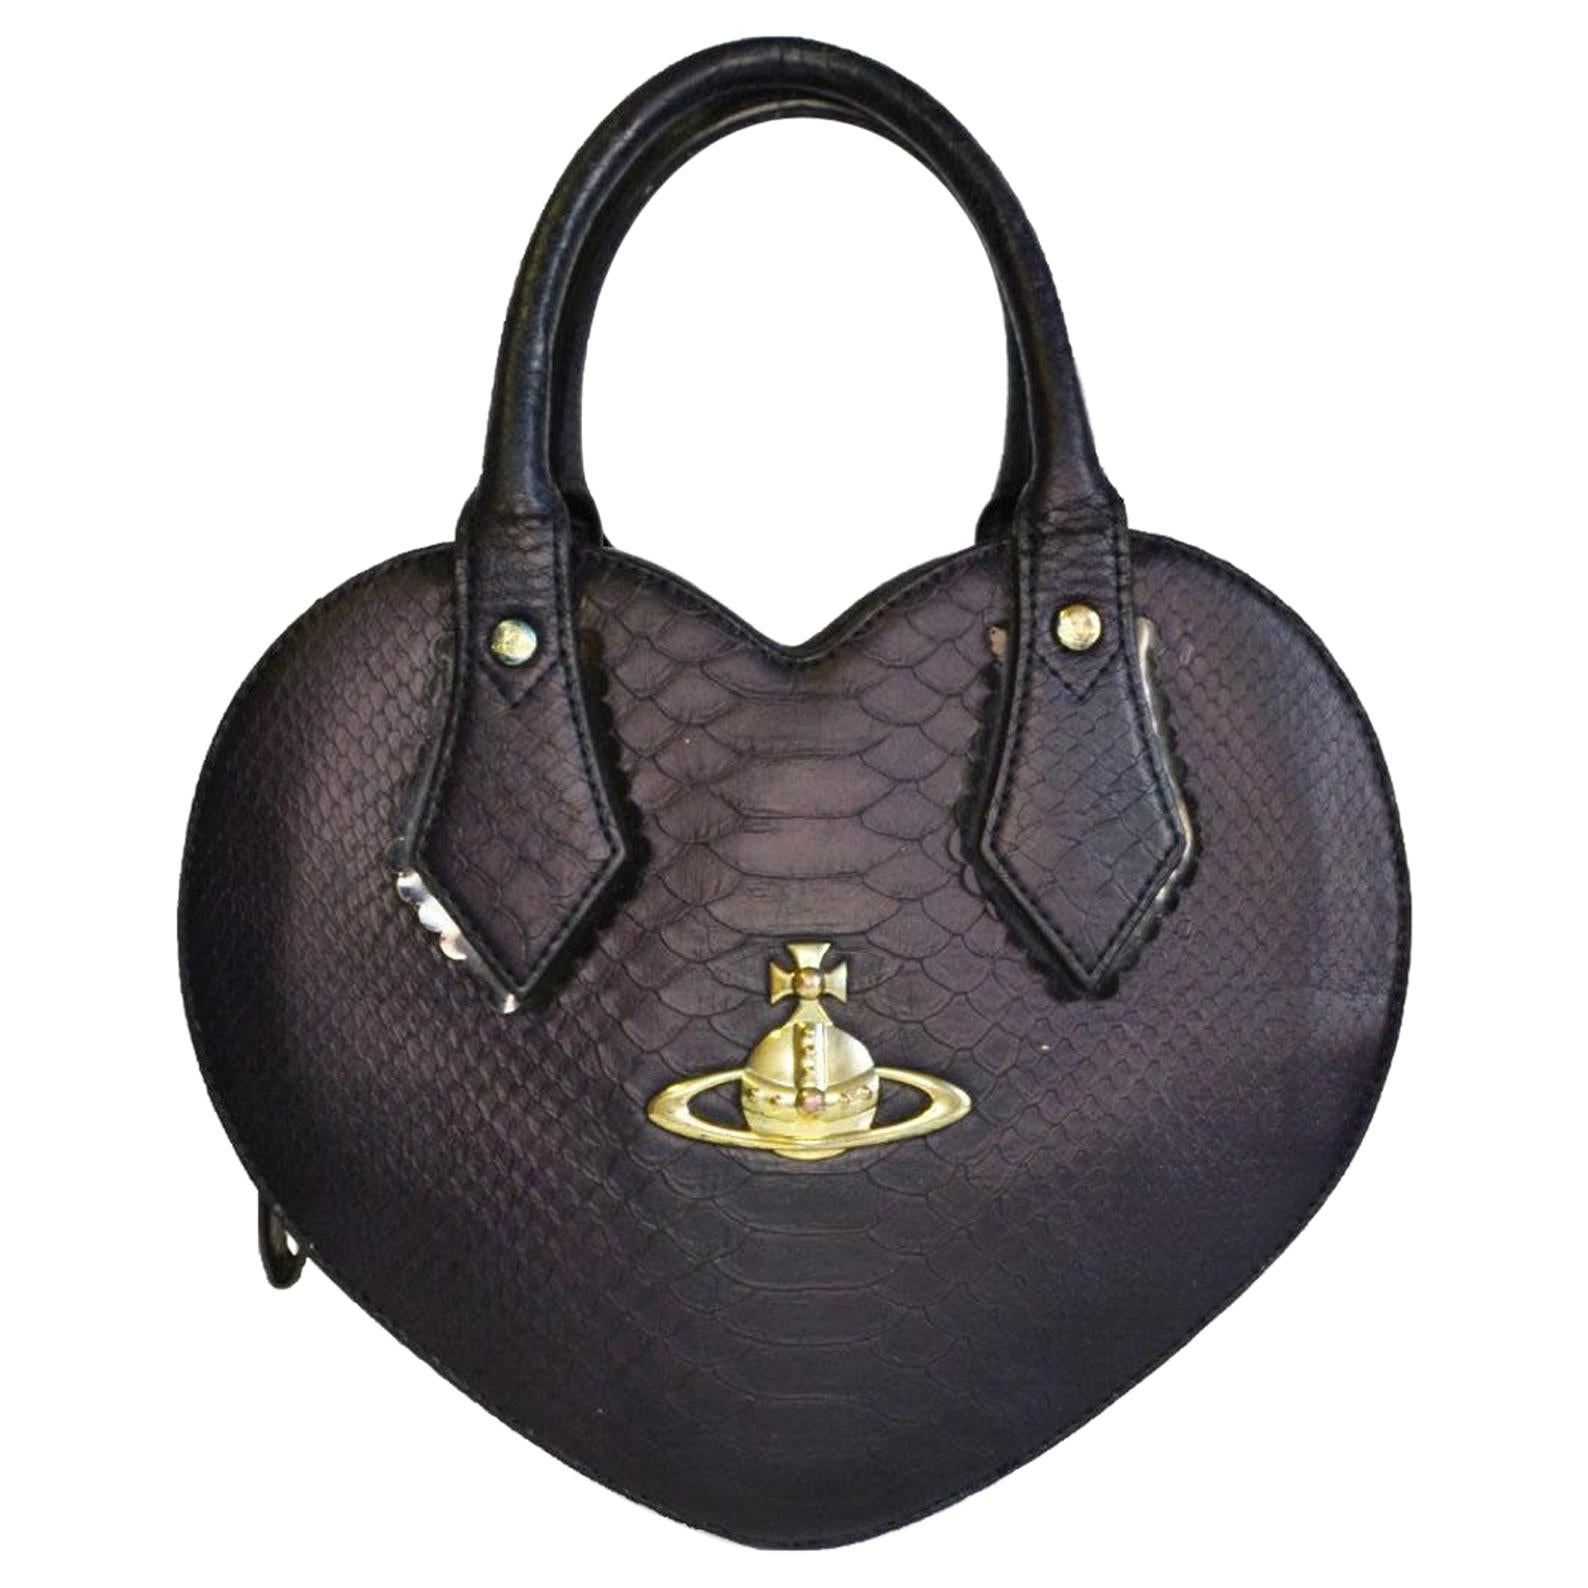 Vivienne Westwood Heart Bag - Bags and Purses - Lace Market